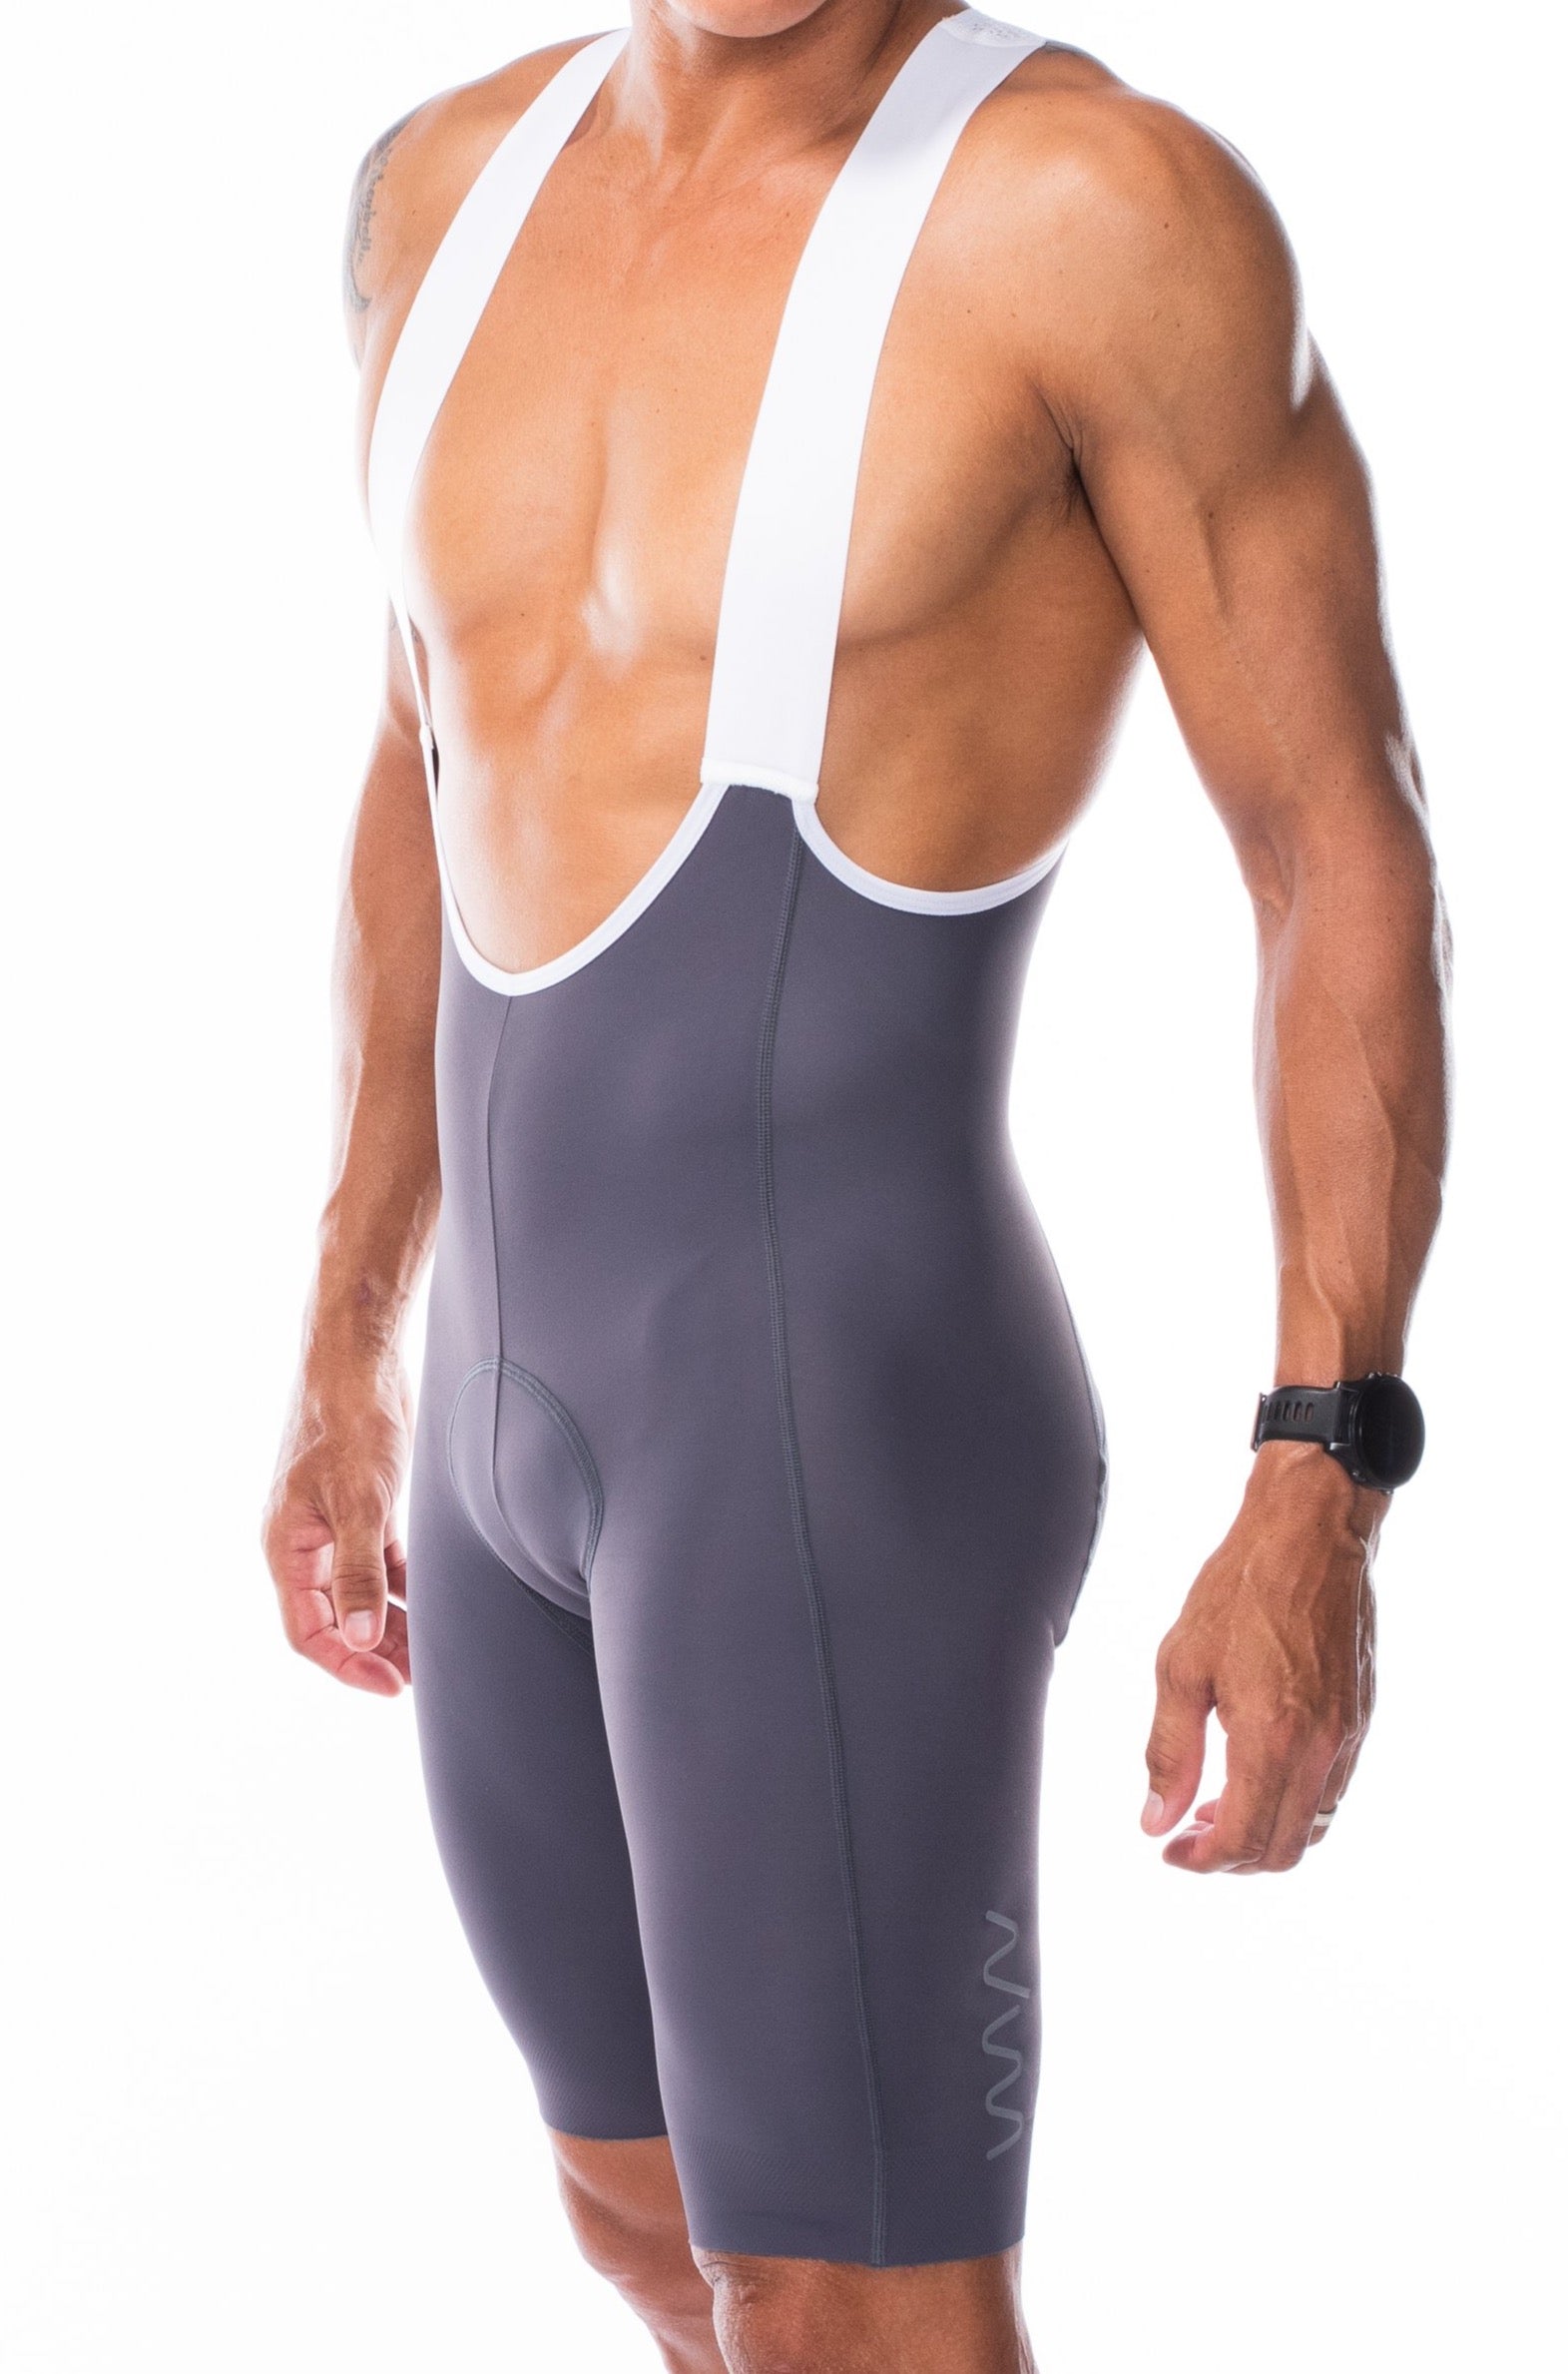 Ga op pad Compliment toonhoogte men's velocity 2.0 cycling bib shorts - slate – WYN republic